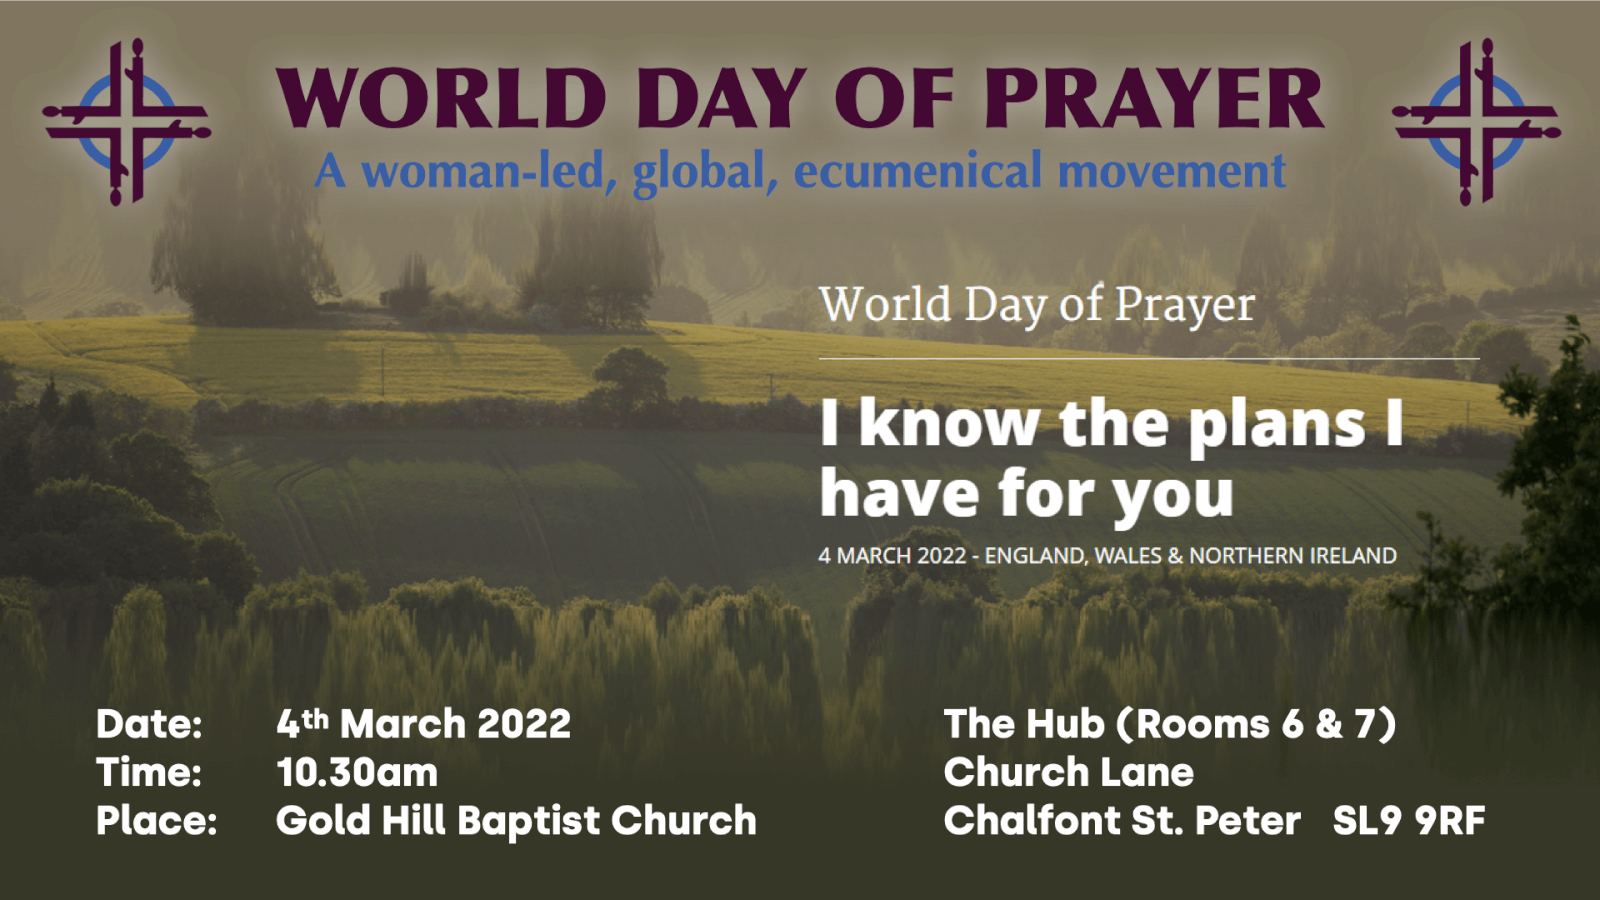 World Day of Prayer: 4 March 2022: Gold Hill Baptist Church